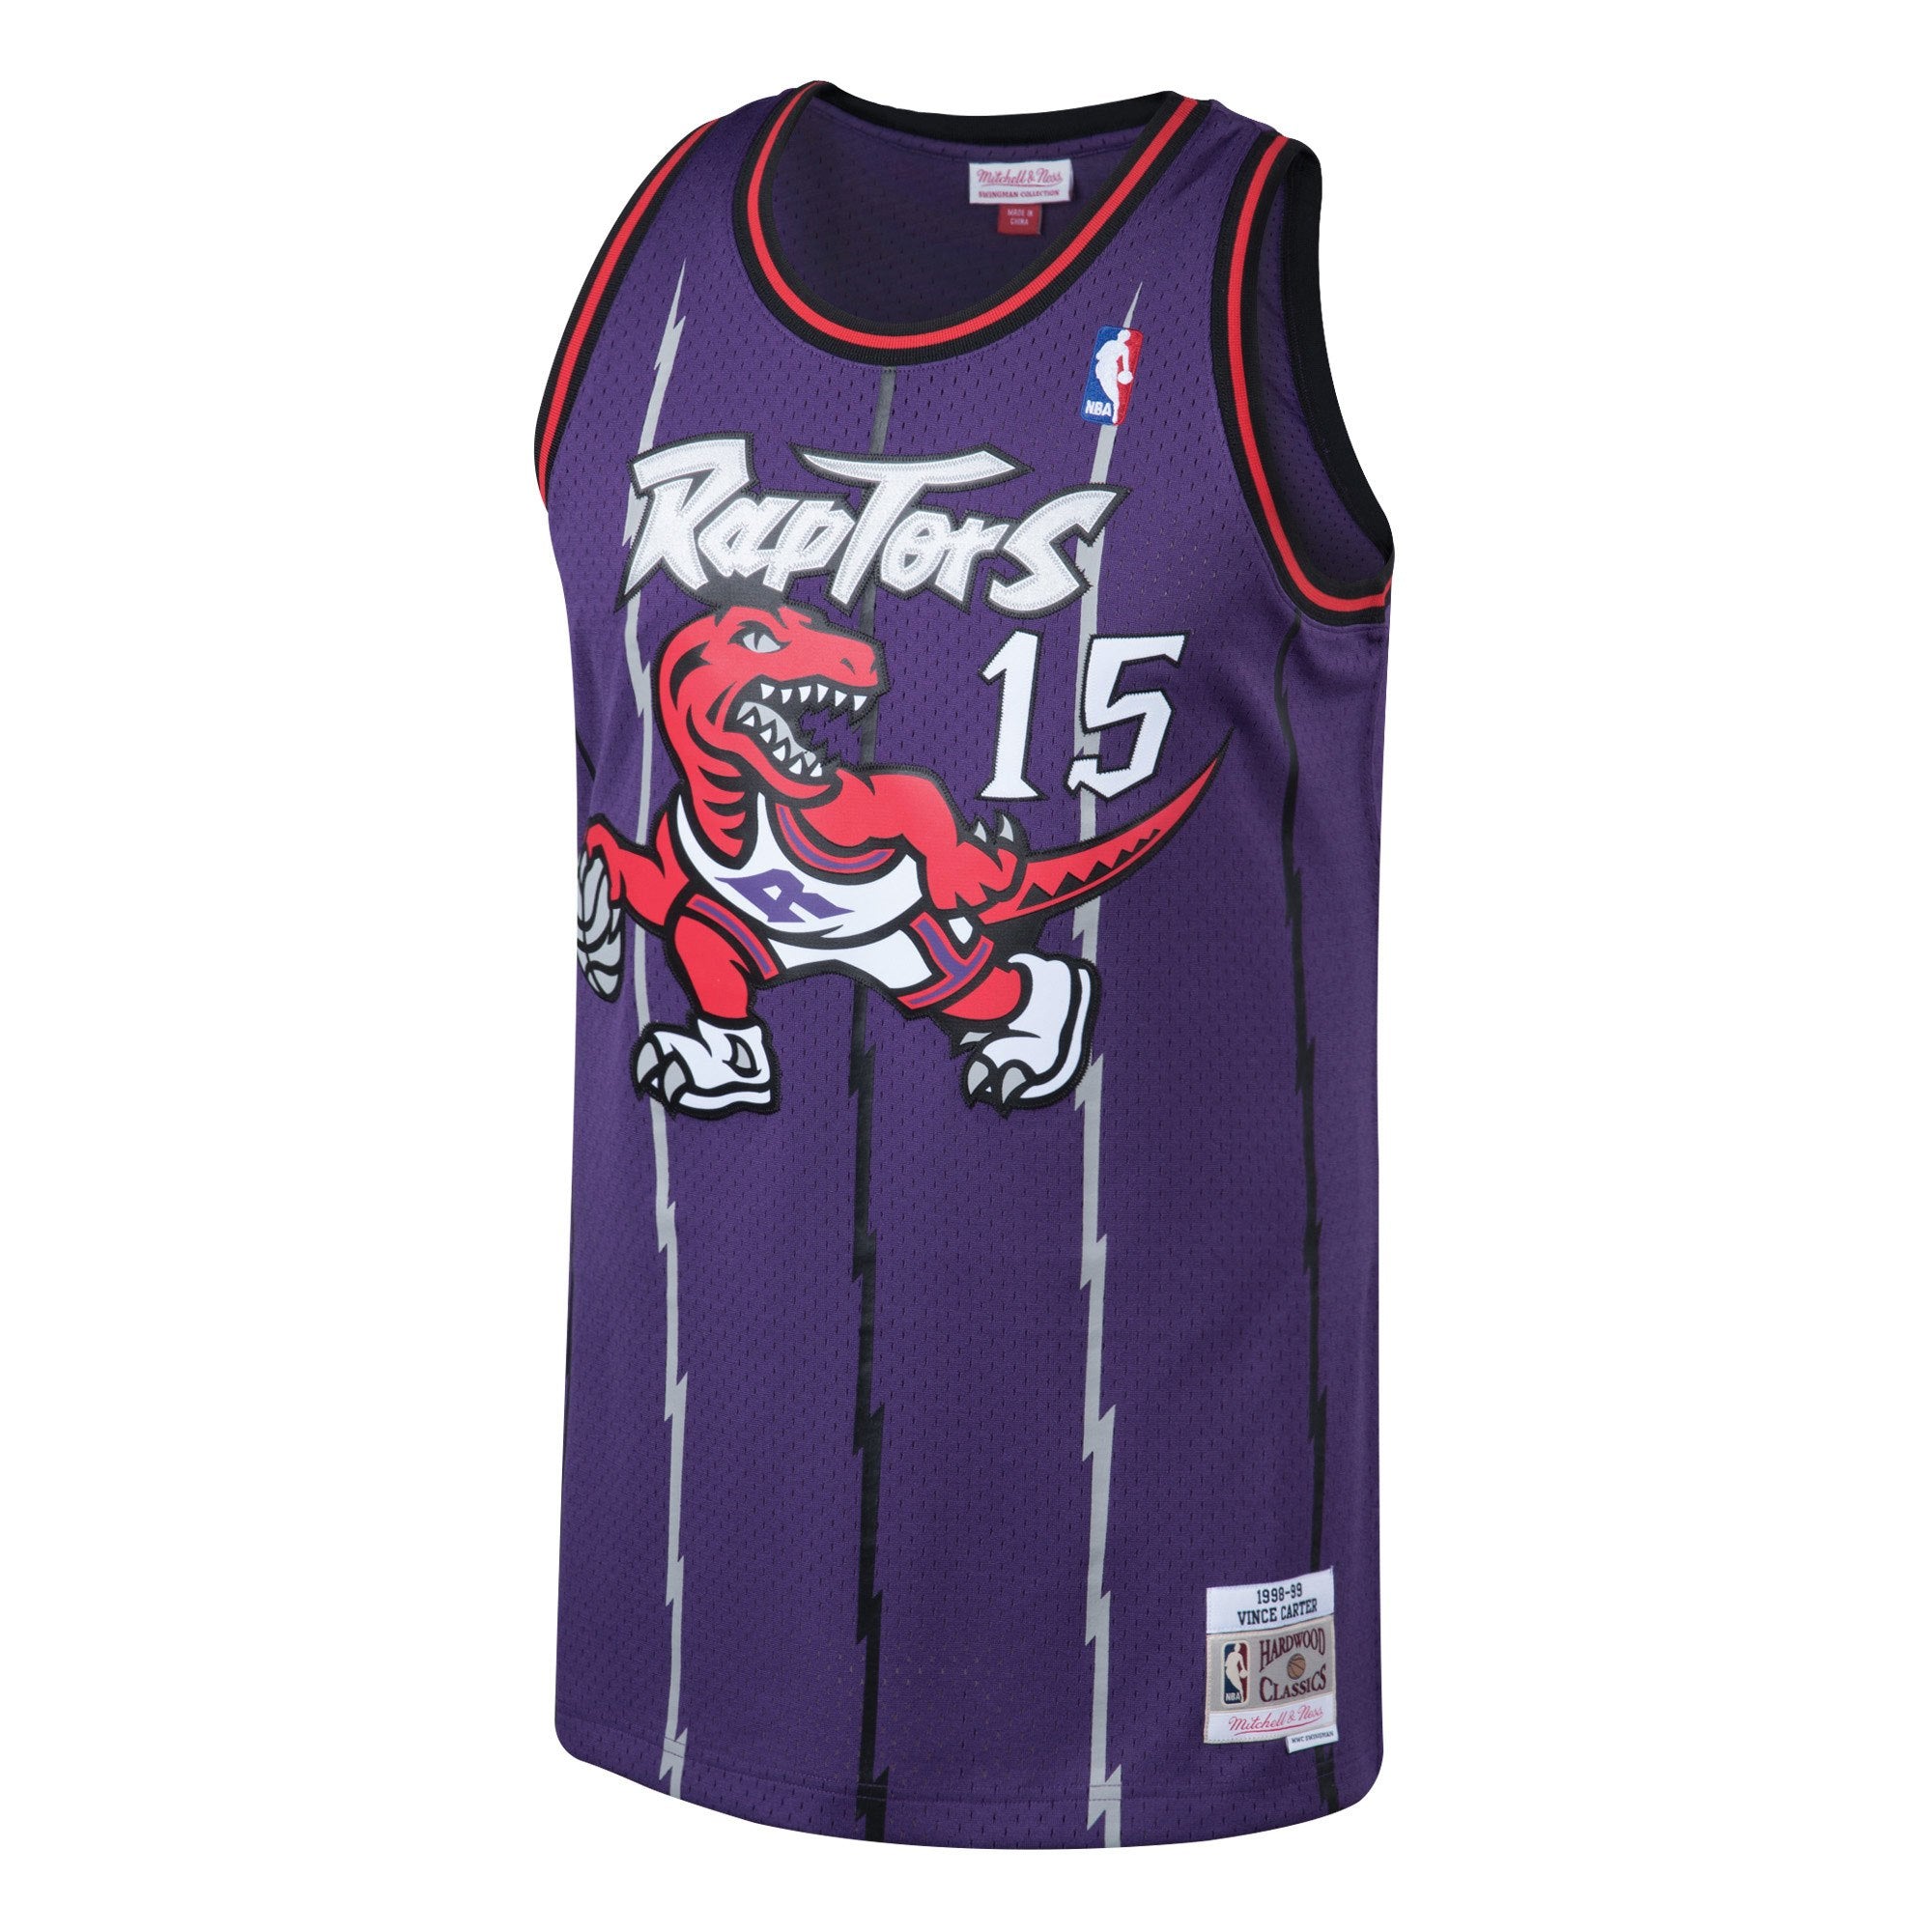 It's back! Raptors to wear purple throwback jerseys against Wizards -  Toronto